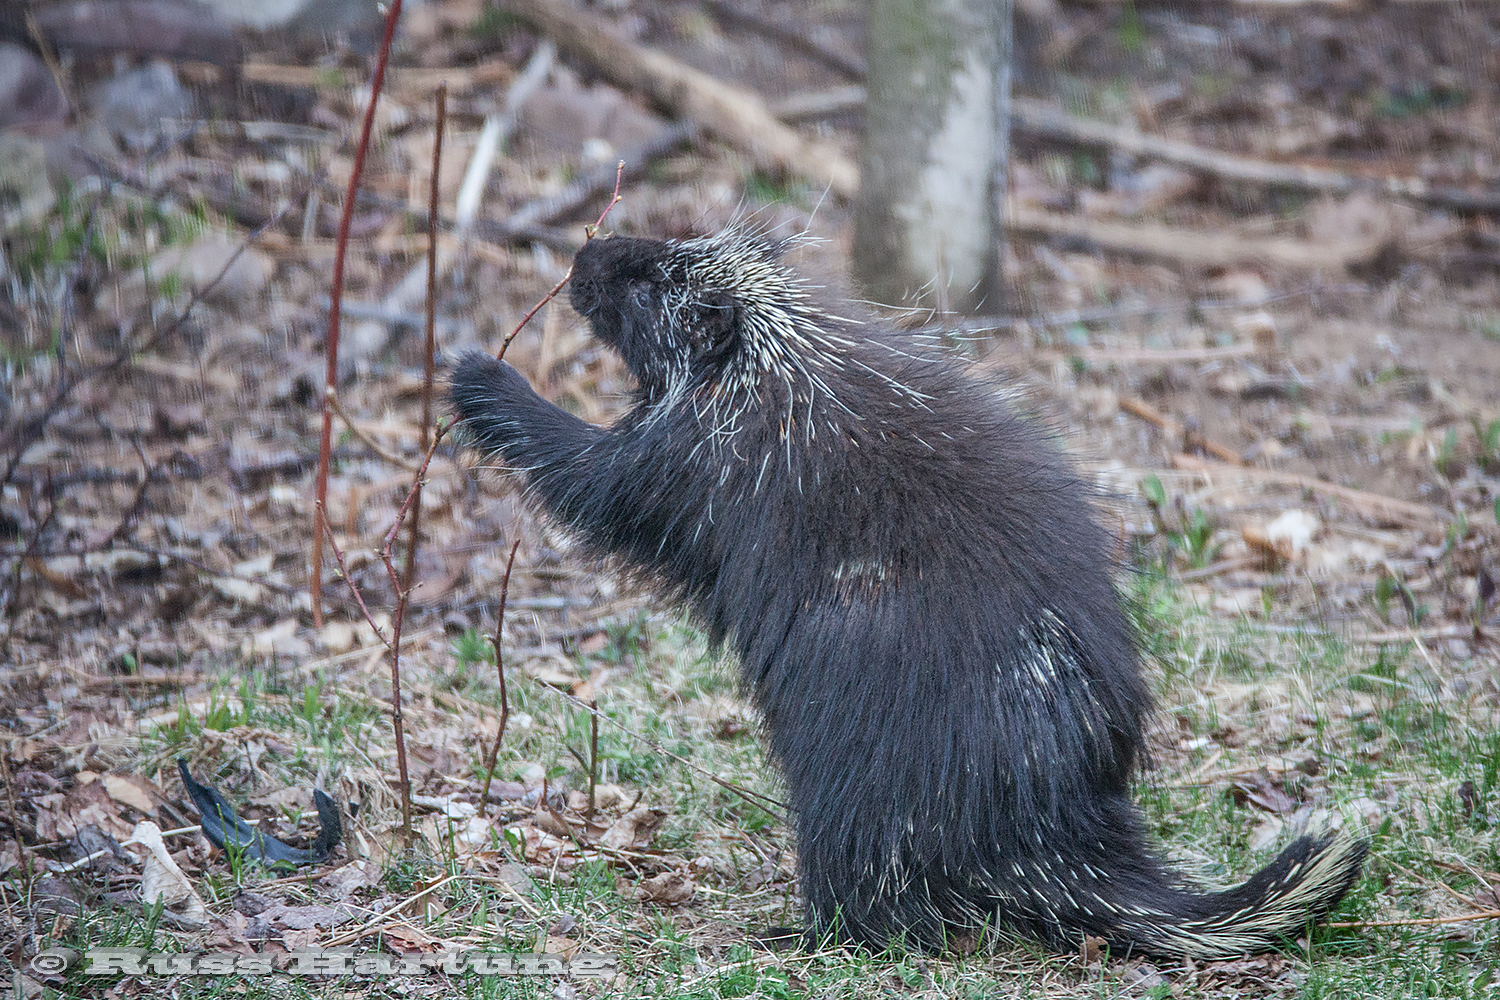  A porcupine eating buds off a sapling. 